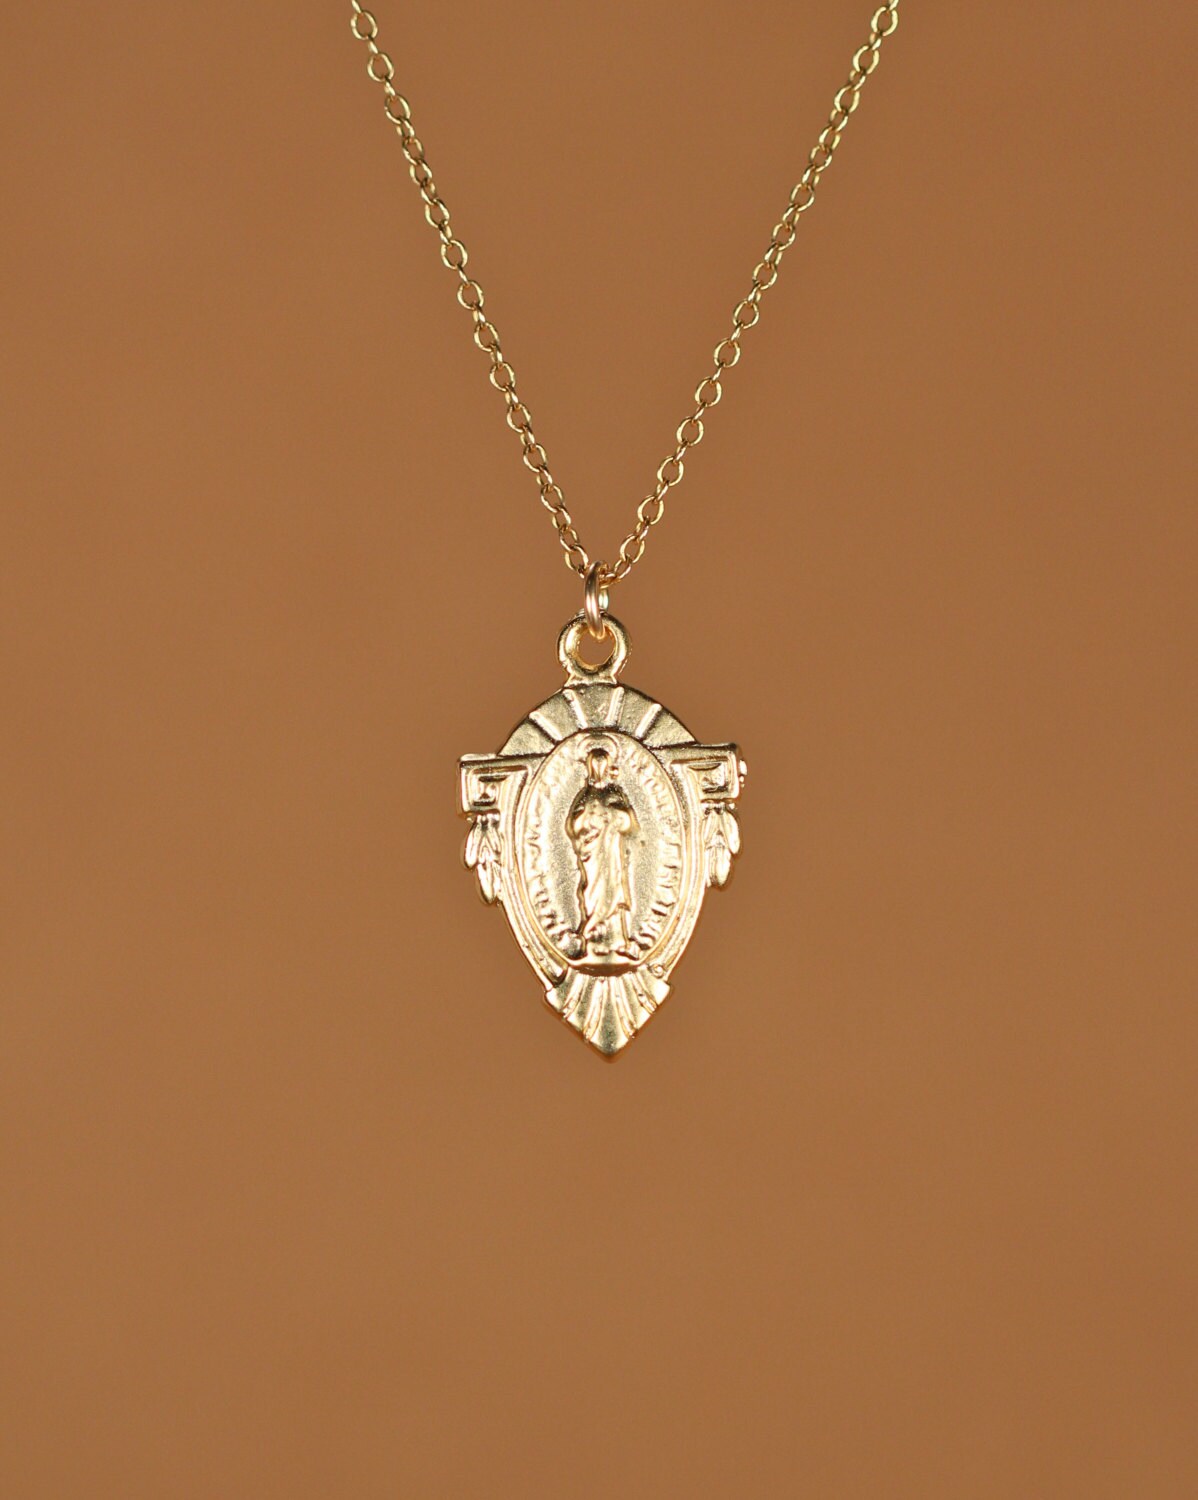 Virgin mary necklace - religious necklace - catholic necklace - a tiny